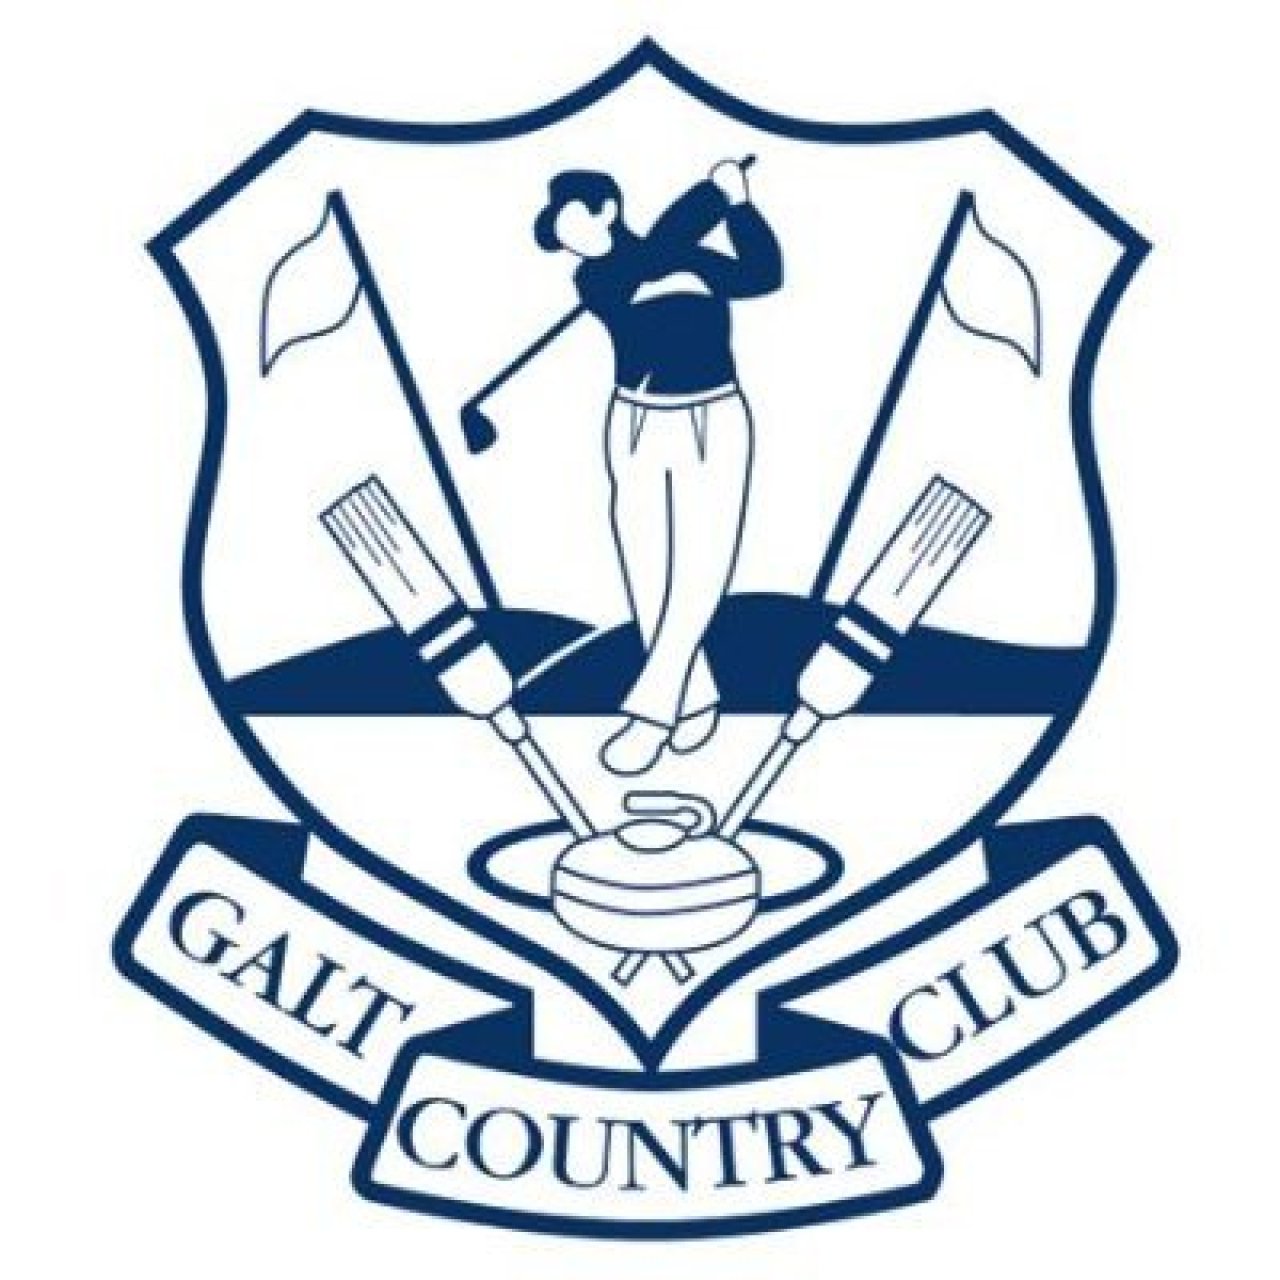 Galt Country Club.